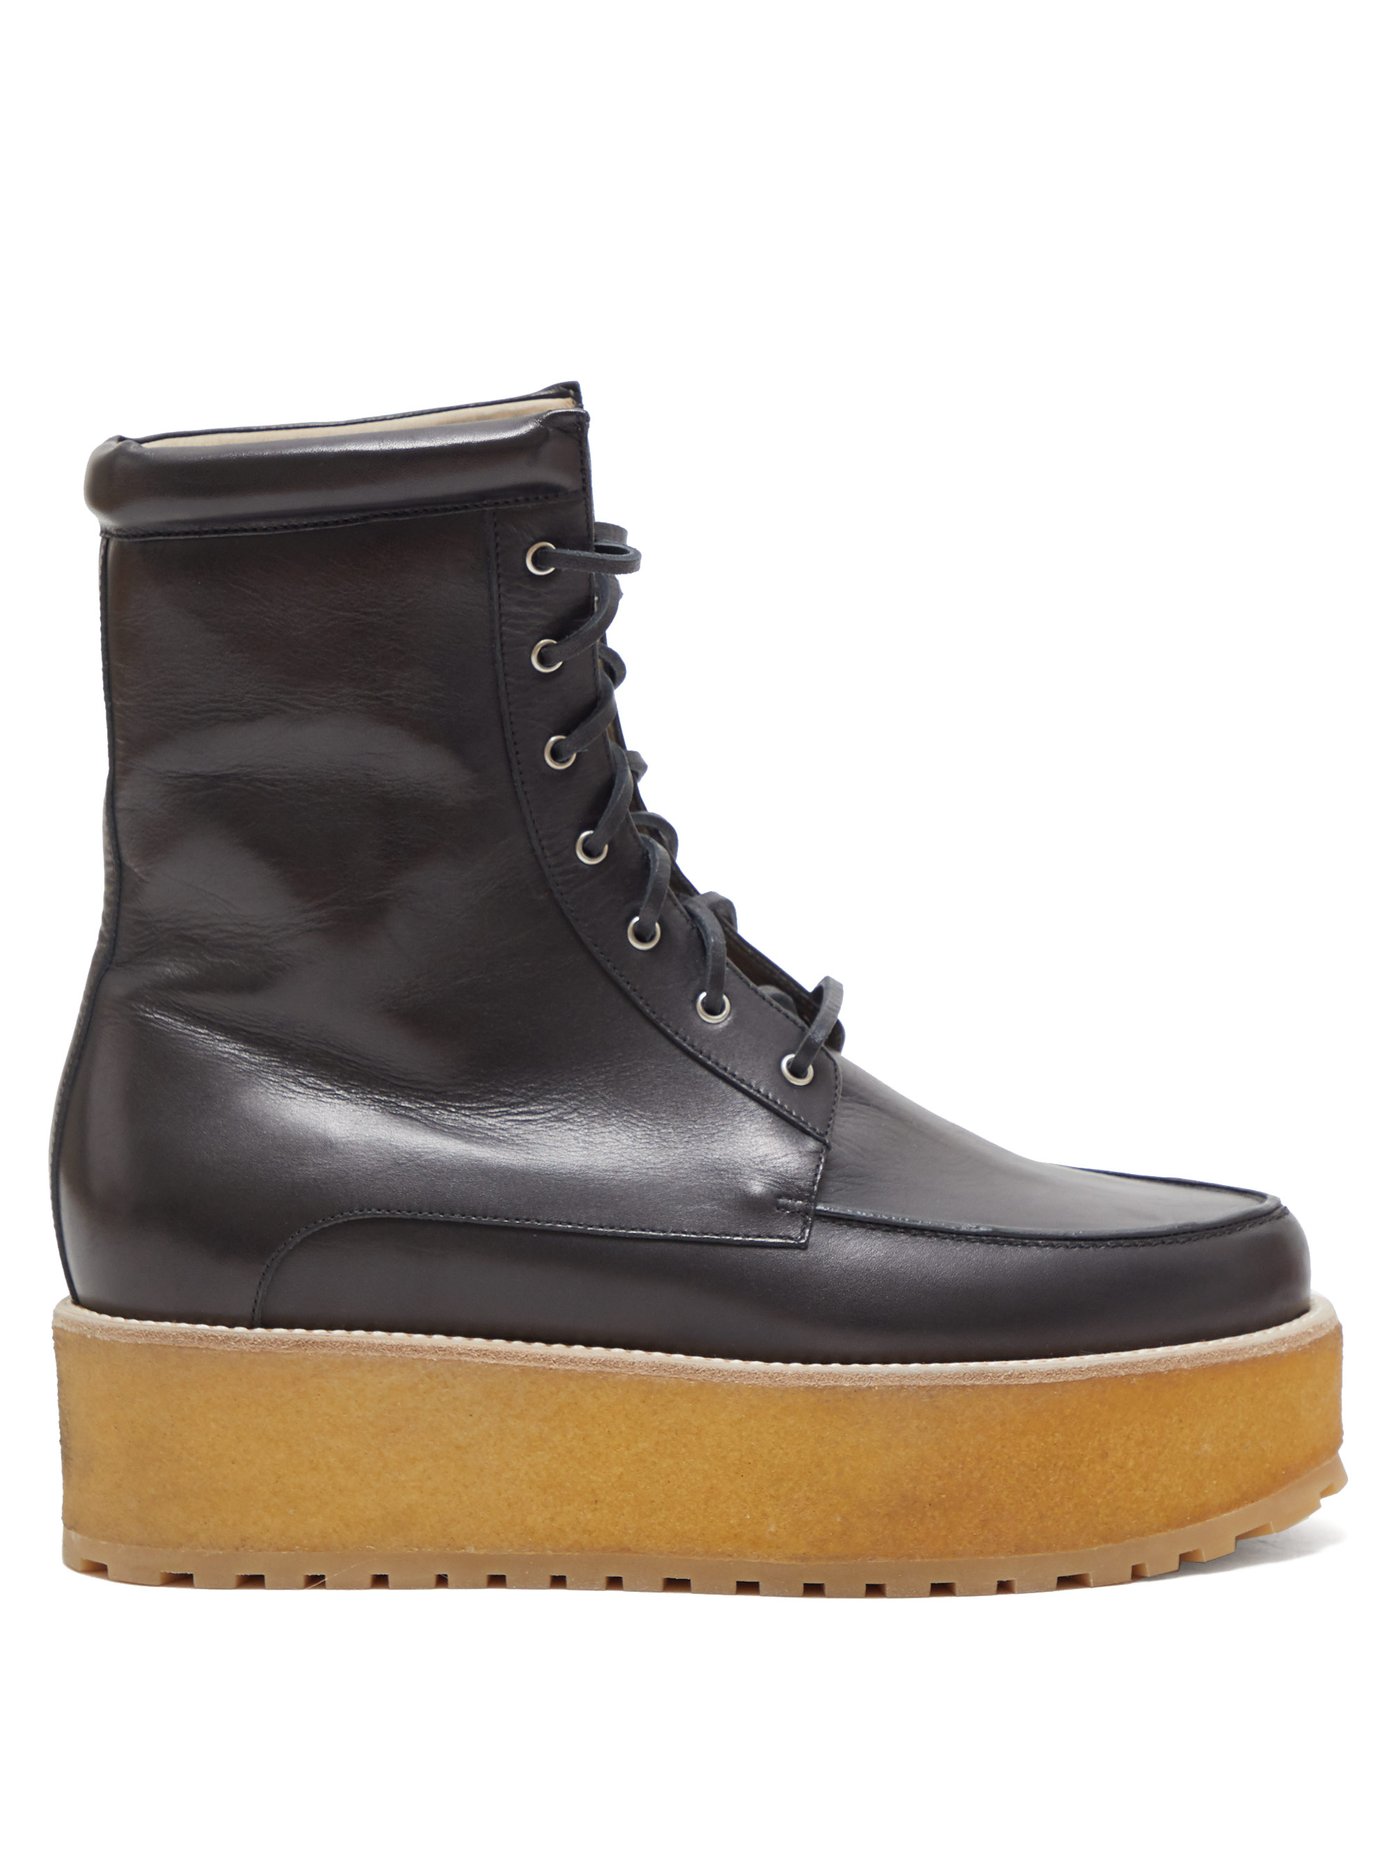 David leather flatform boots | Gabriela 